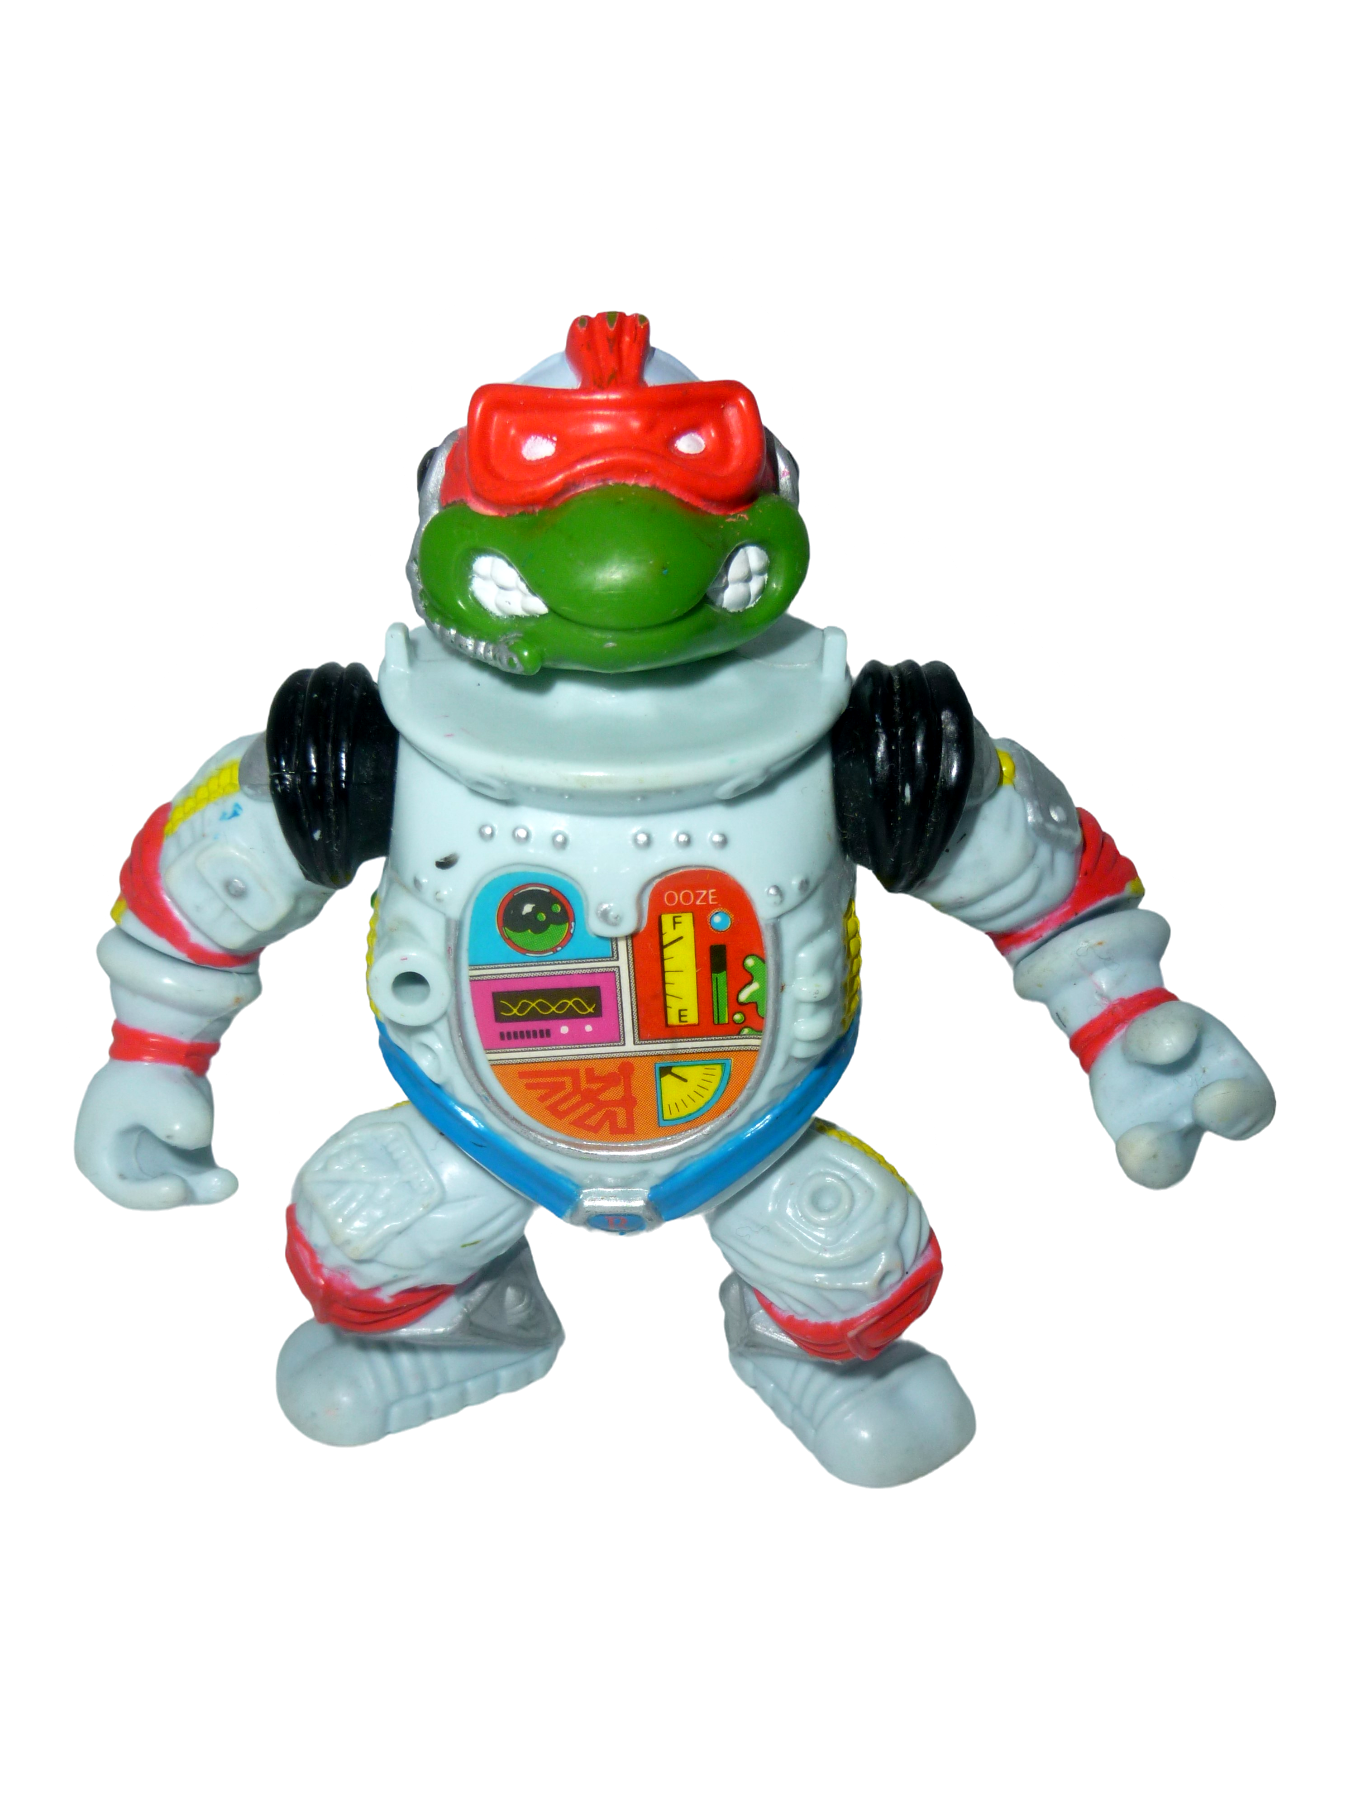 Astronaut Space Cadet Raphael 1990 Mirage Studios / Playmates Toys